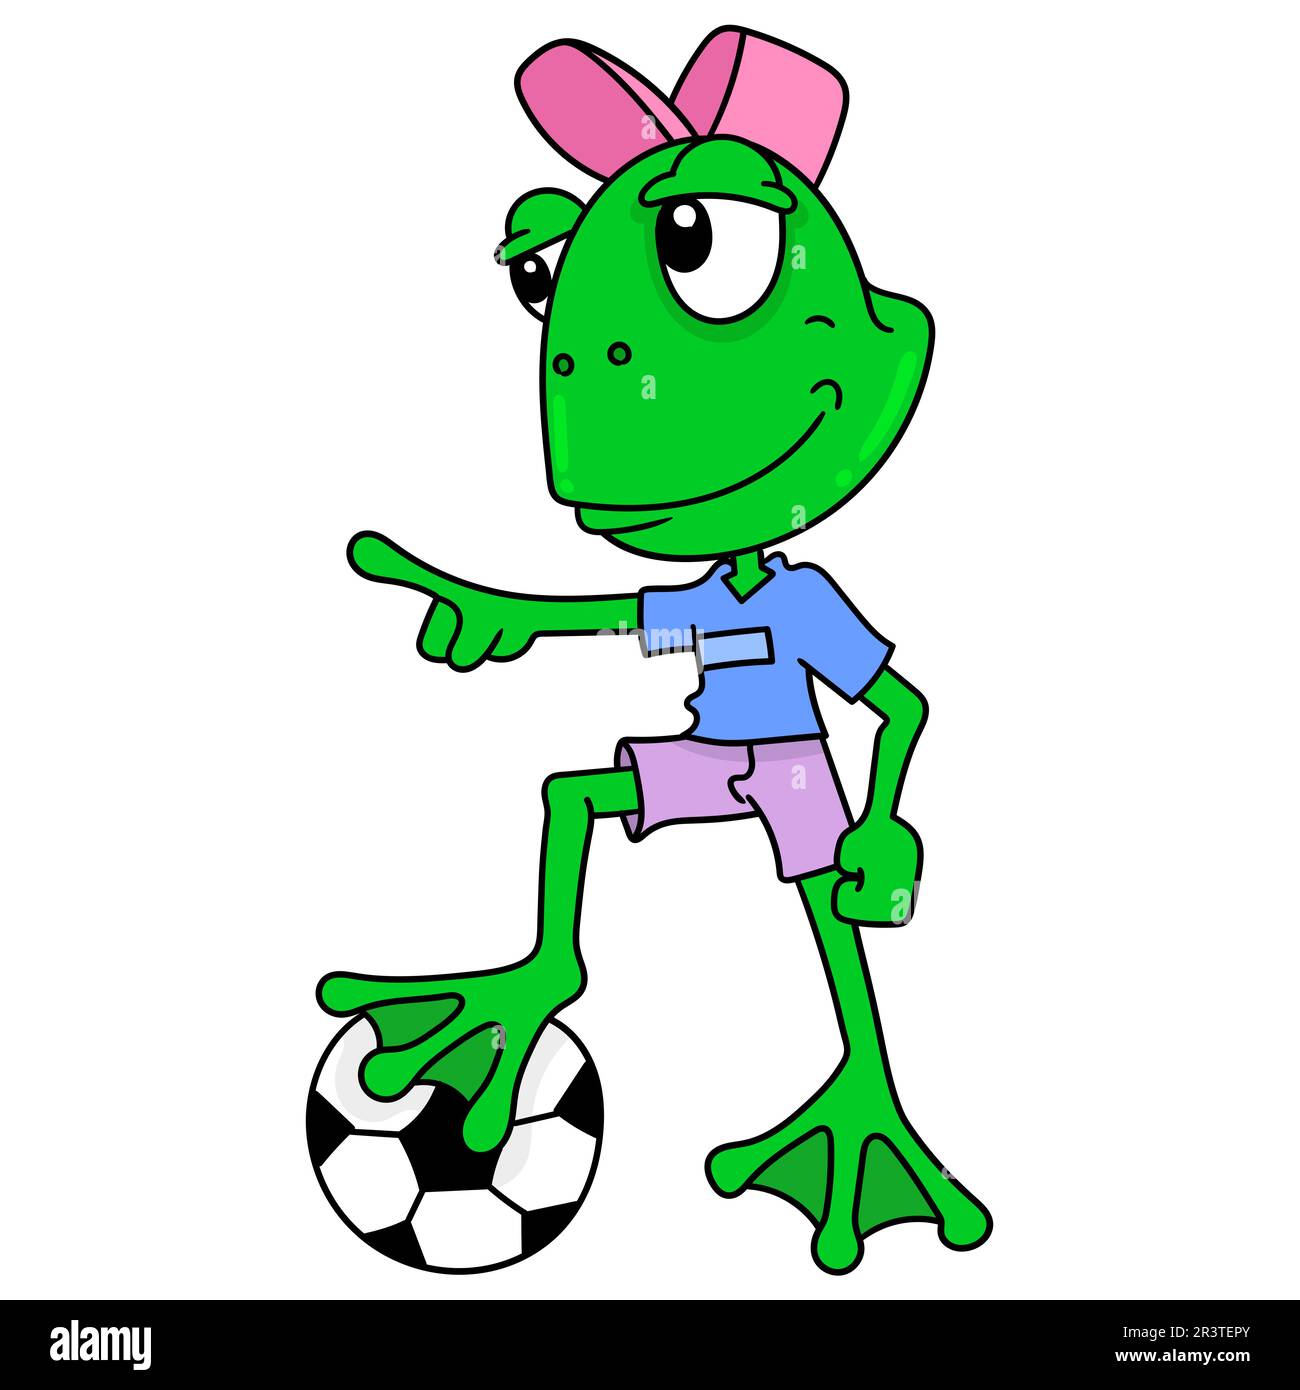 Frog boy playing football, doodle icon image kawaii Stock Photo